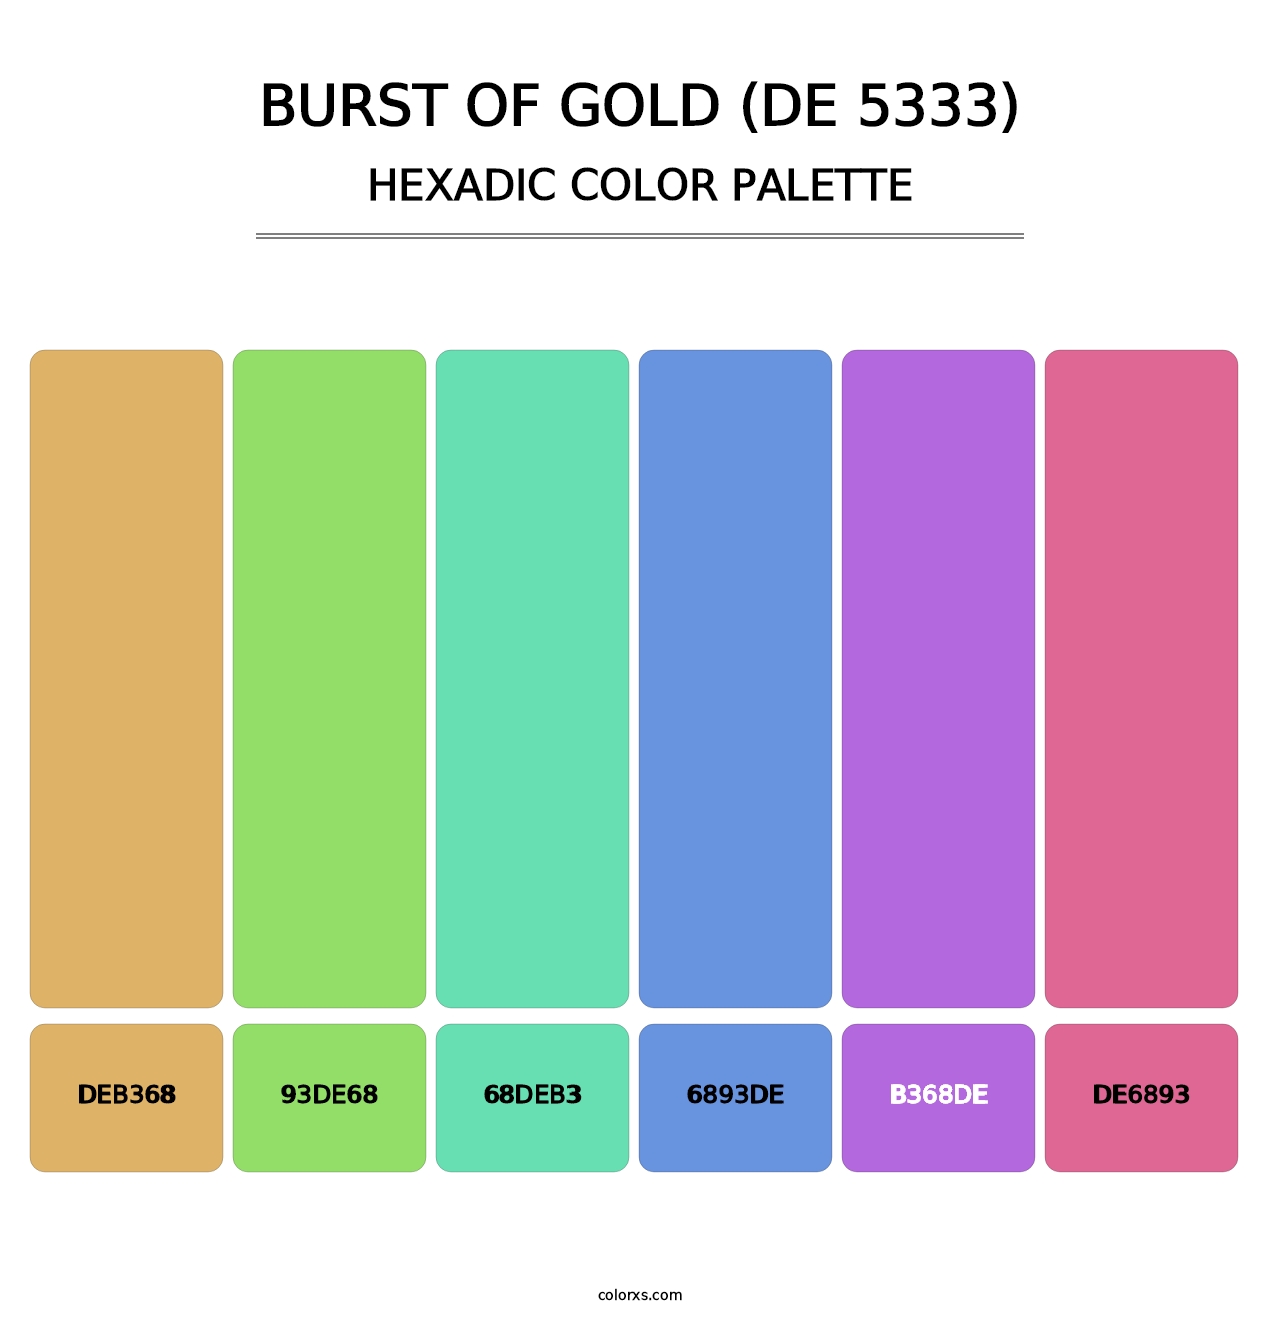 Burst of Gold (DE 5333) - Hexadic Color Palette